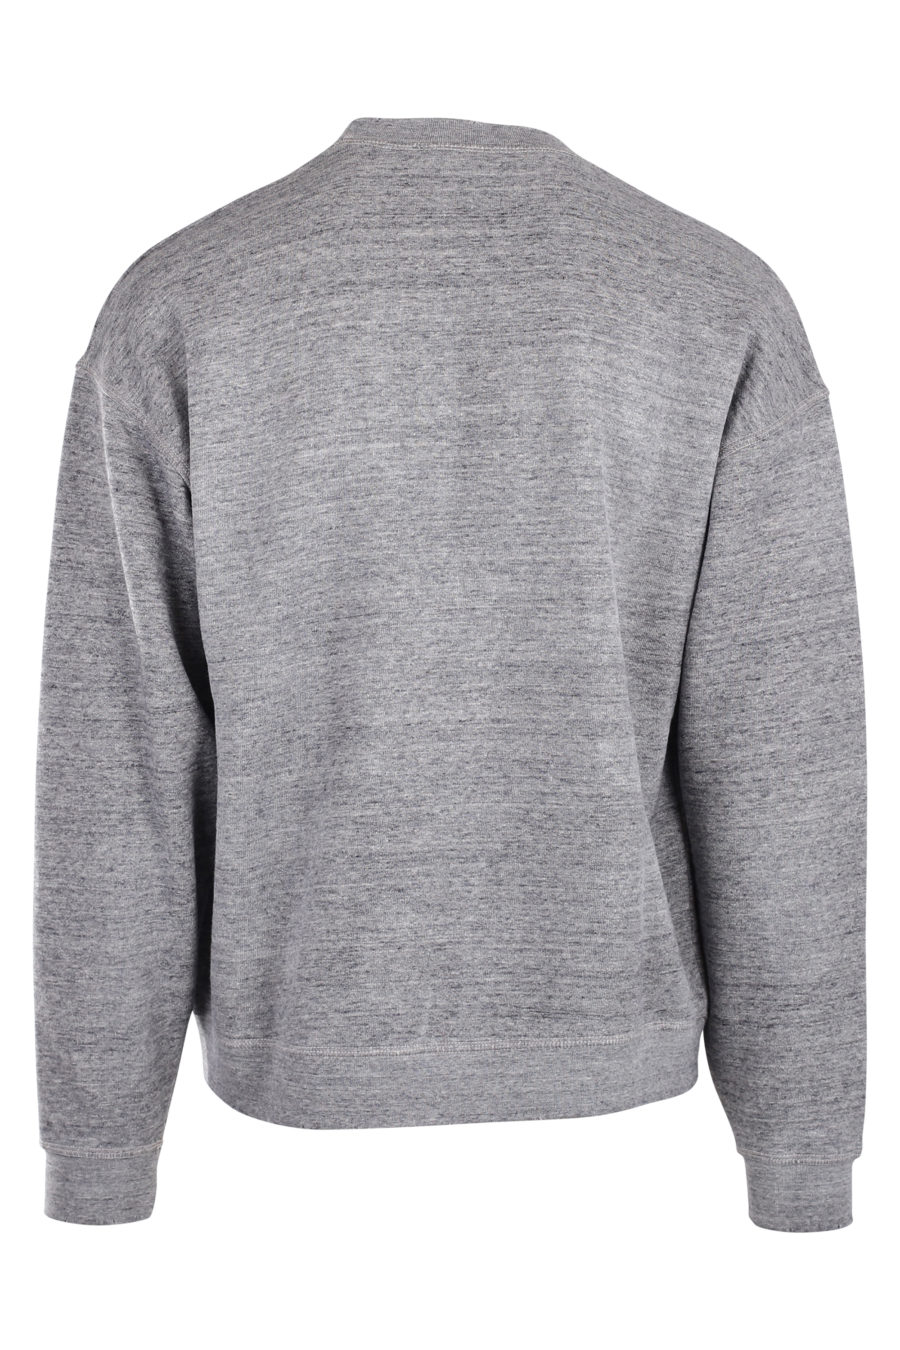 Graues Sweatshirt mit "phys ed 64" Logo schwarz - IMG 9951